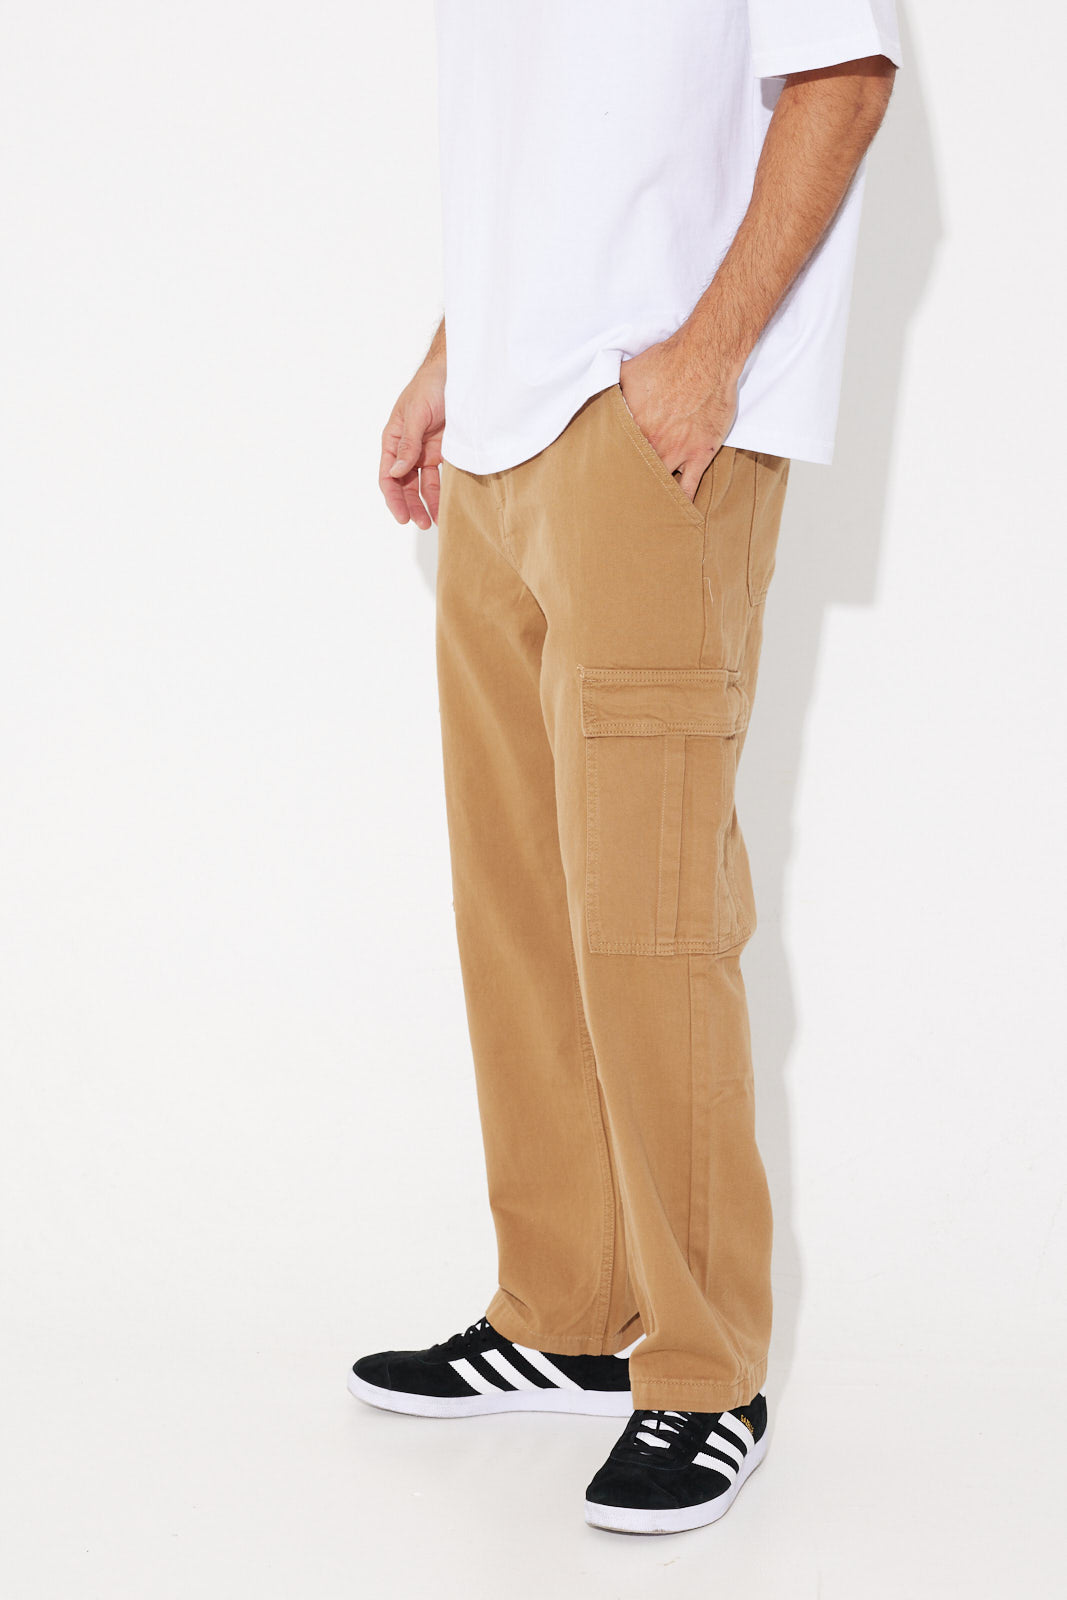 Women's Stylish Pants on Sale | Splendid